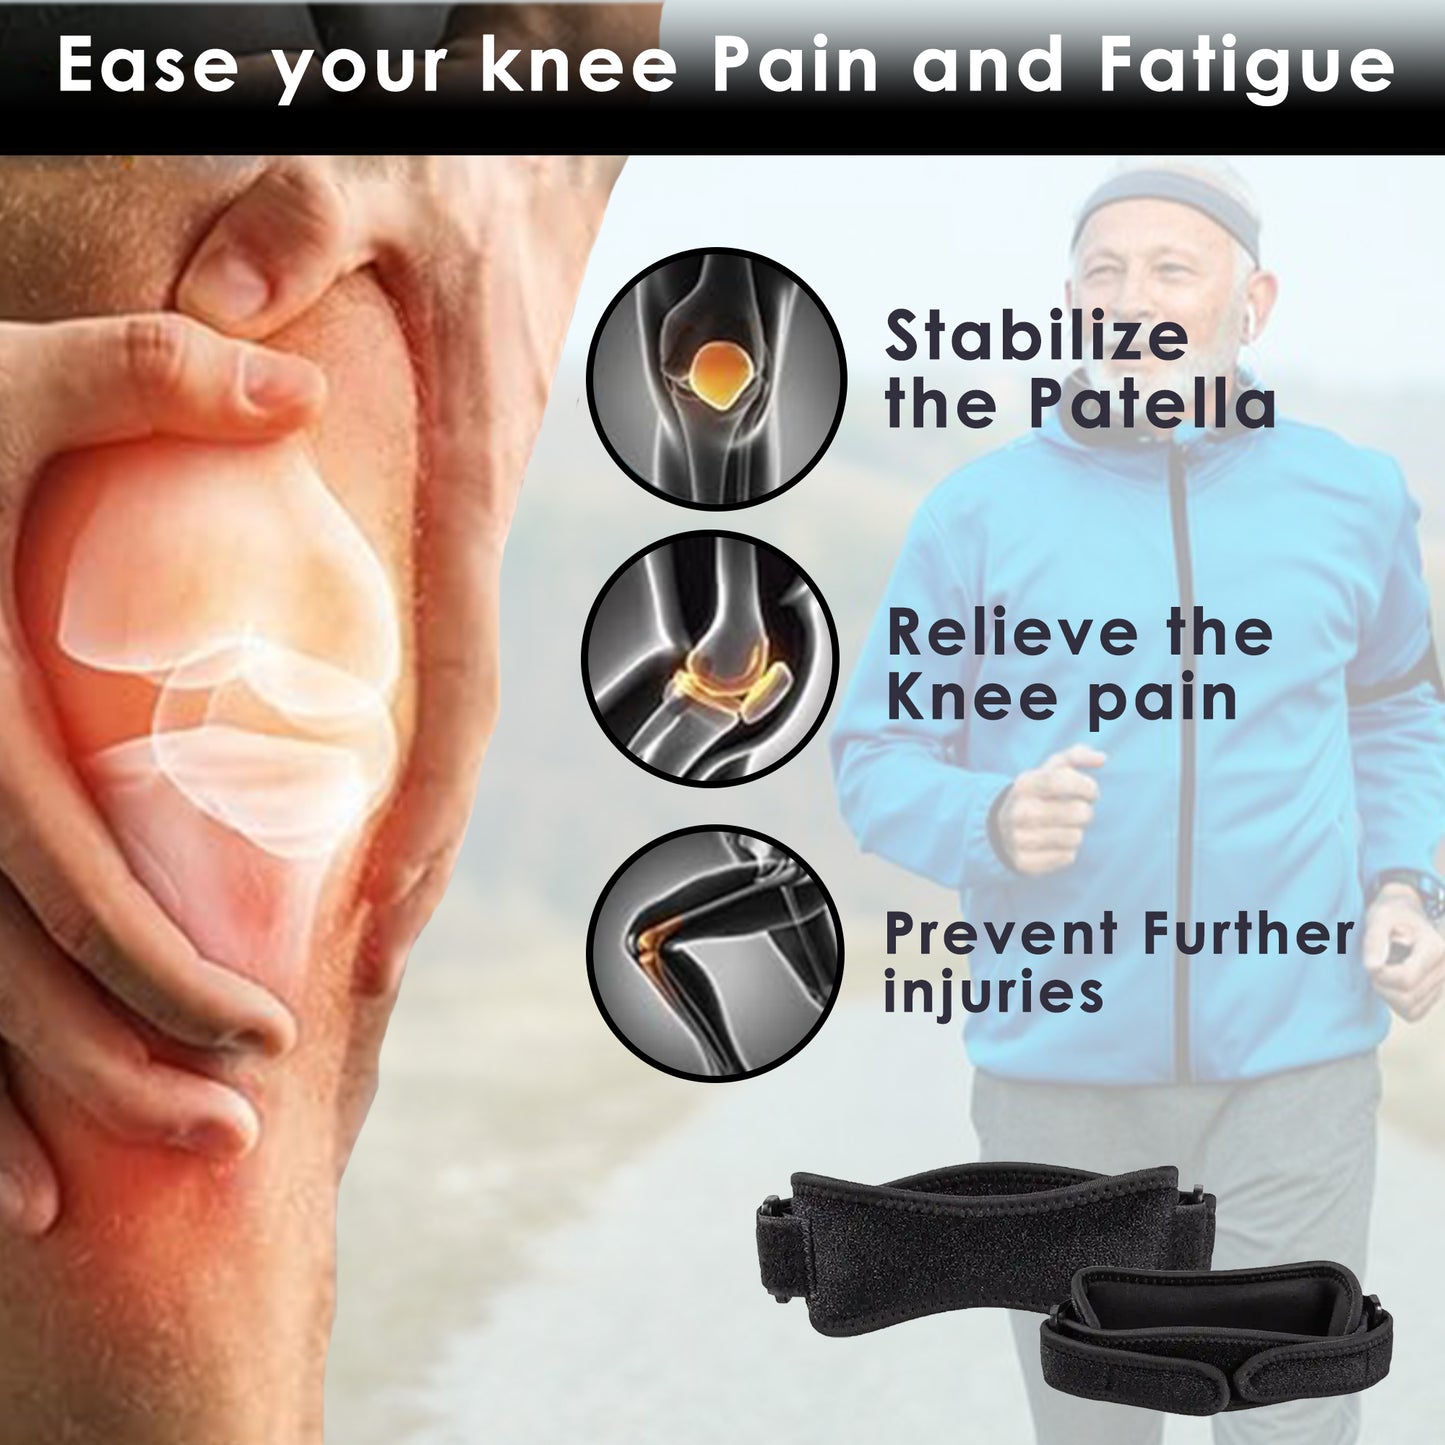 Knee strap's benefits